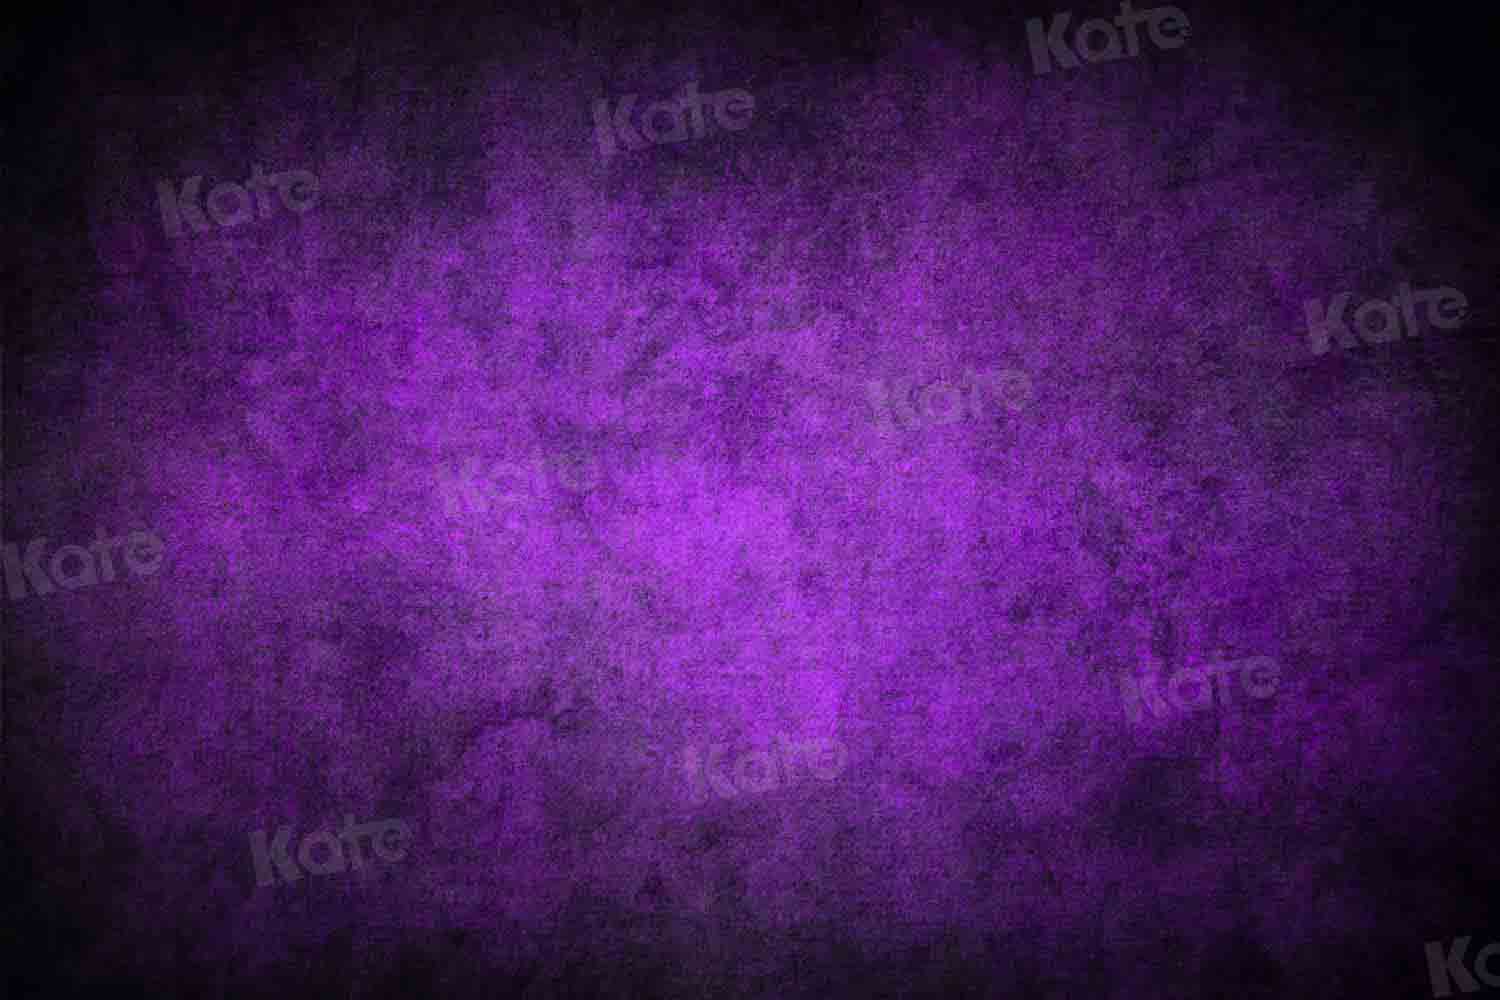 Kate Abstrakter lila Hintergrund Porträt